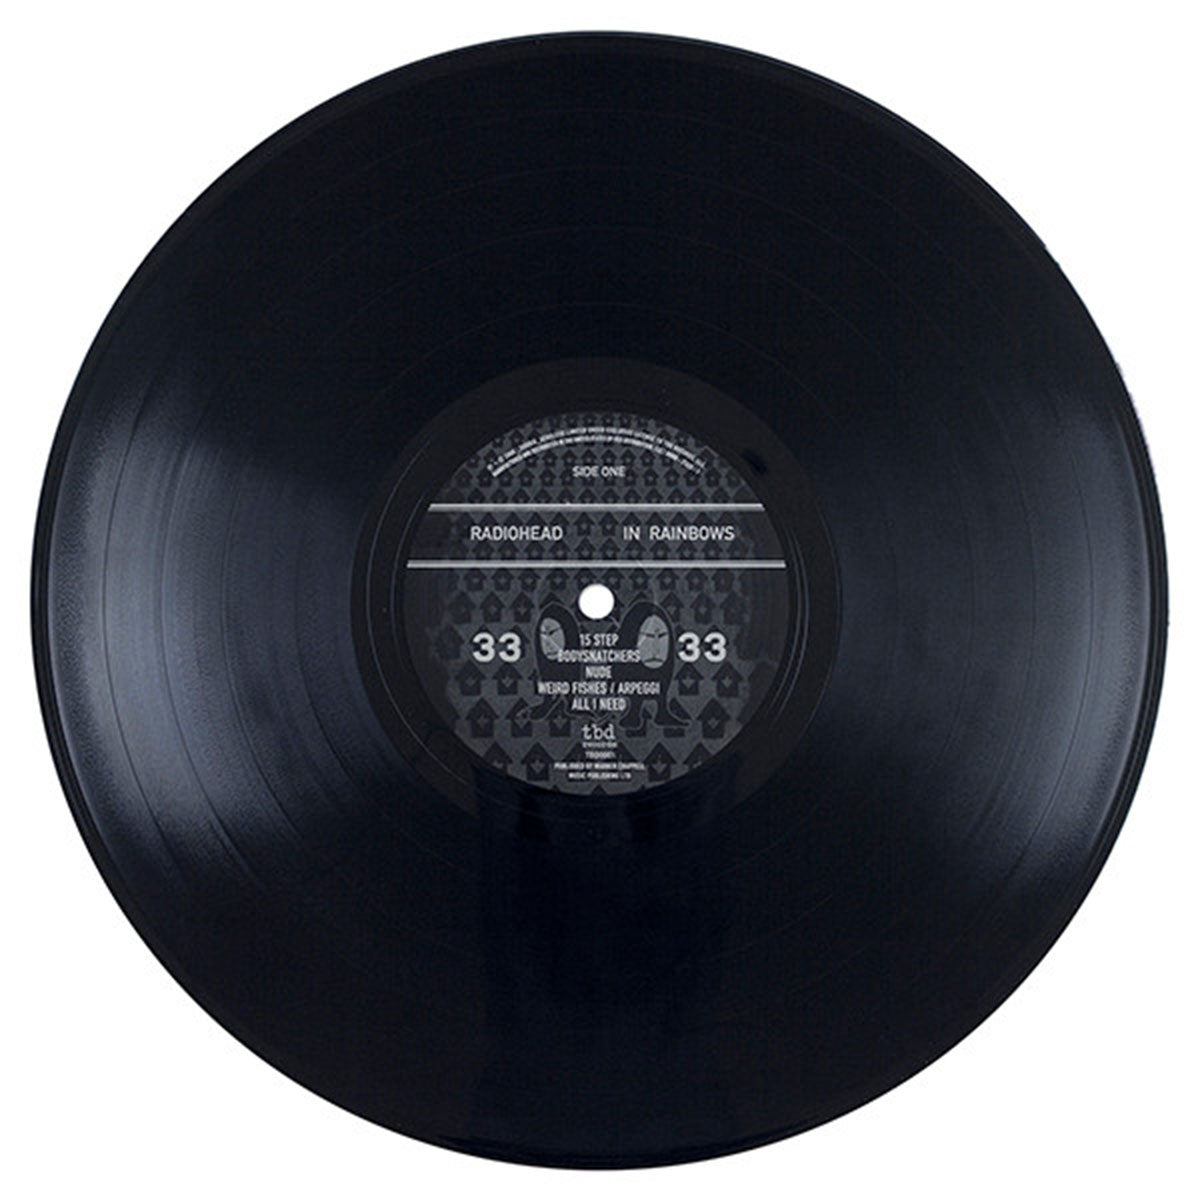 Radiohead – In Rainbows - US Pressing - Misprint – Vinyl